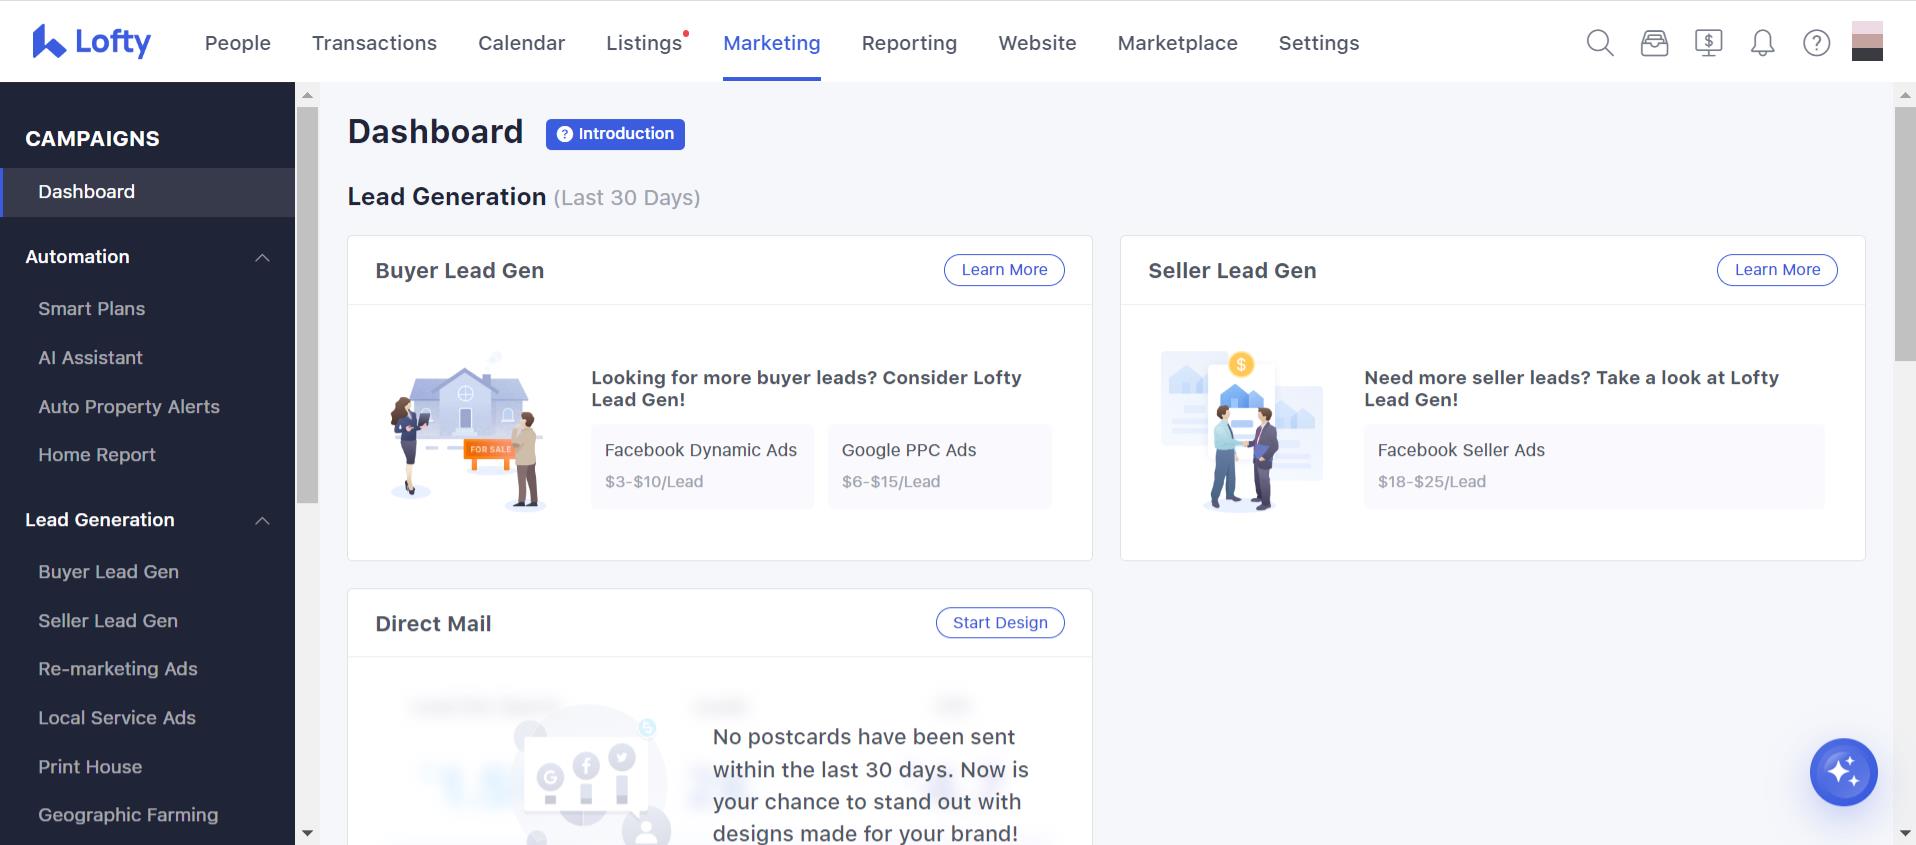 Marketing Section -Lofty Lead Capture Tools – Lofty Help Center